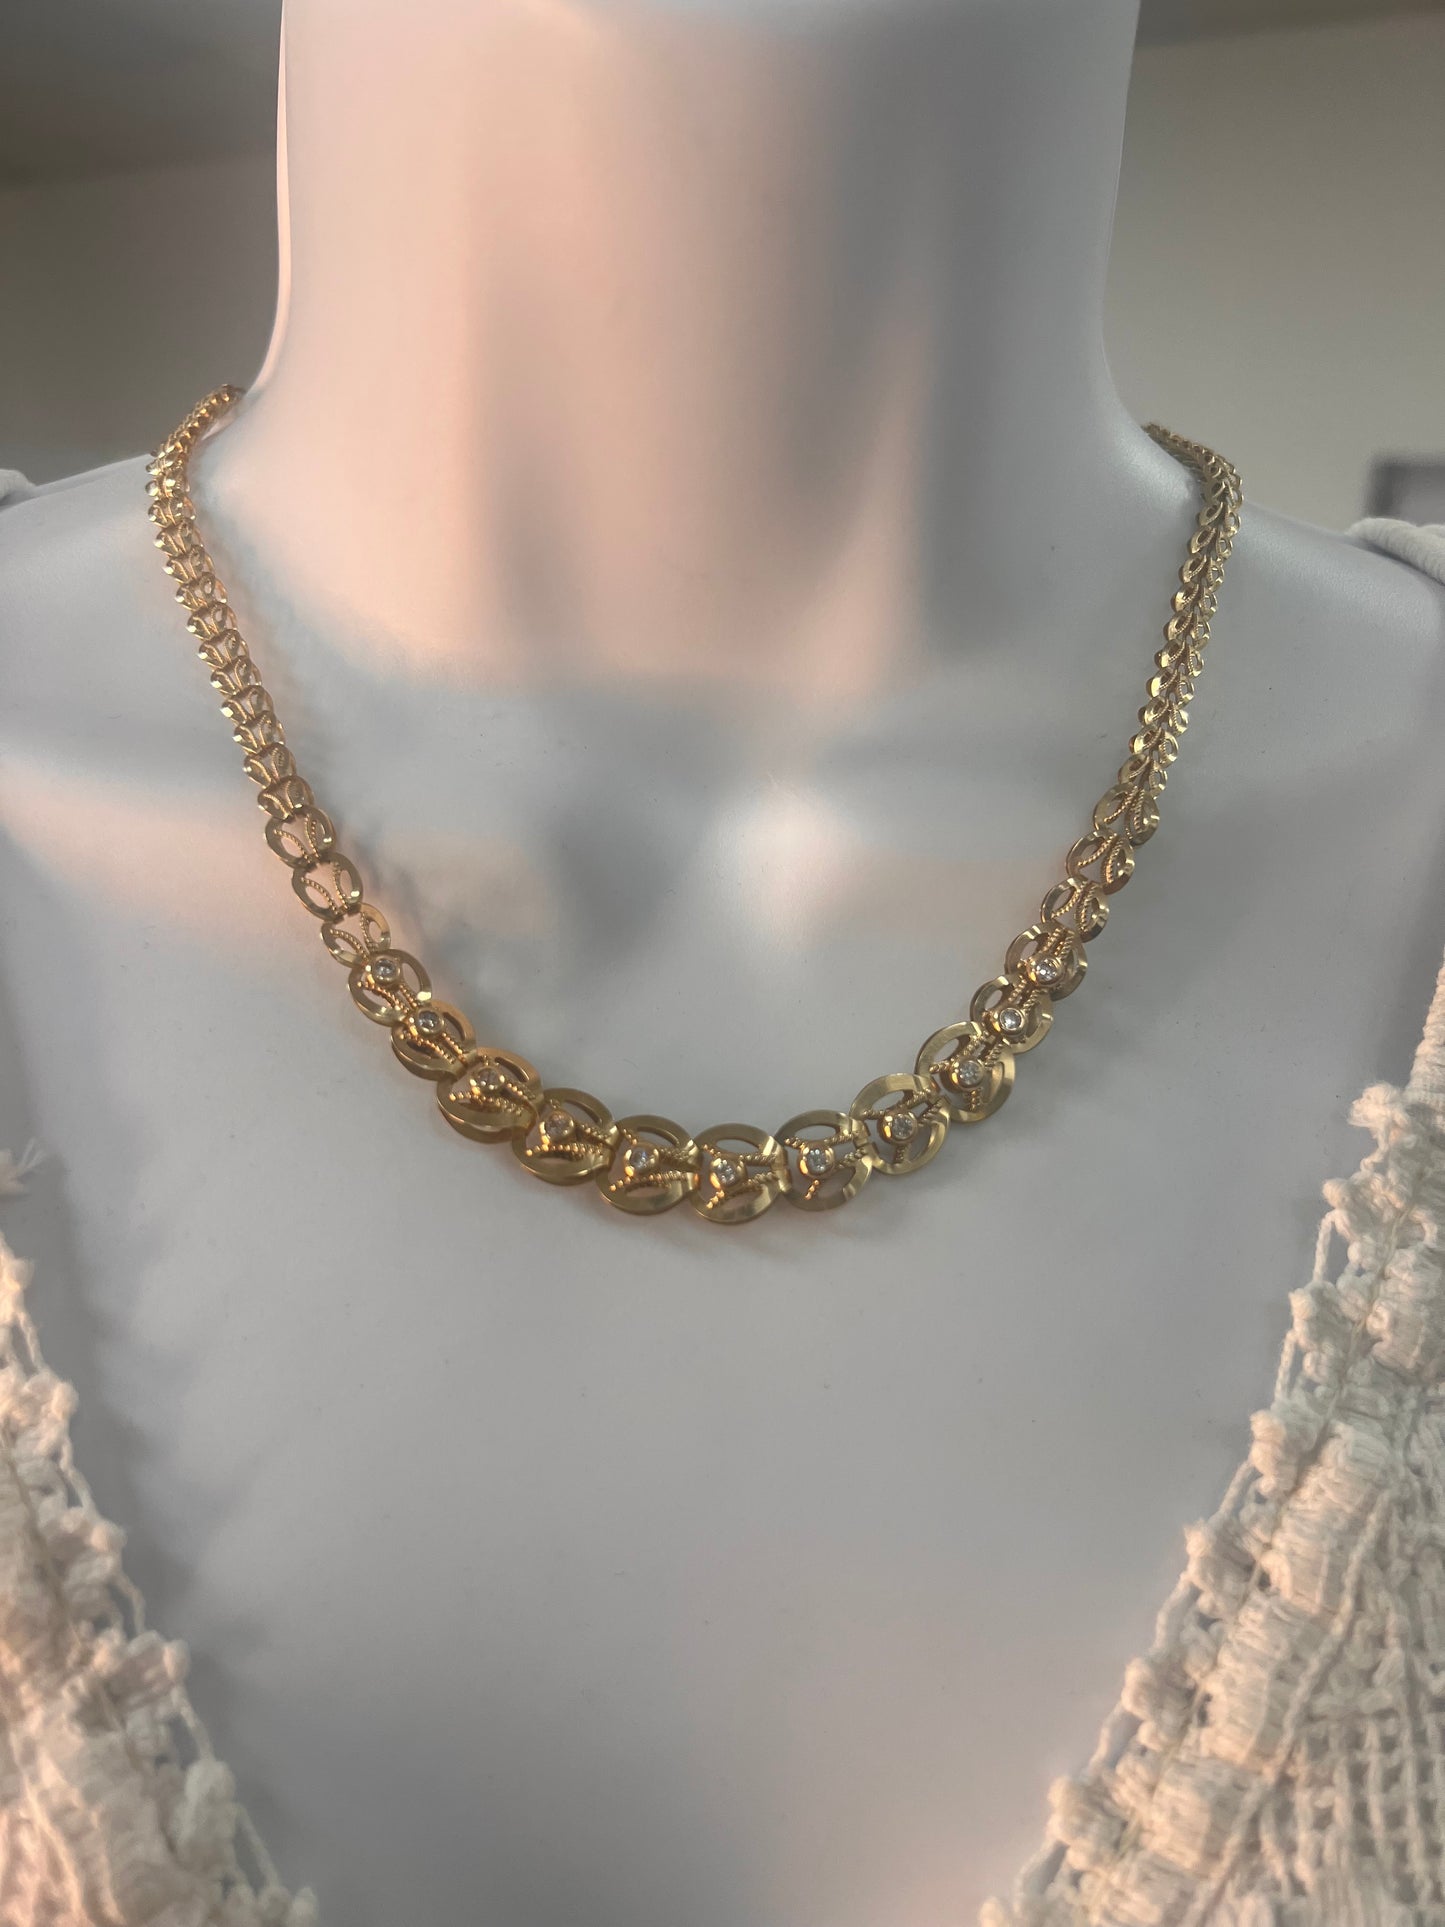 10k gold double size leaf necklace